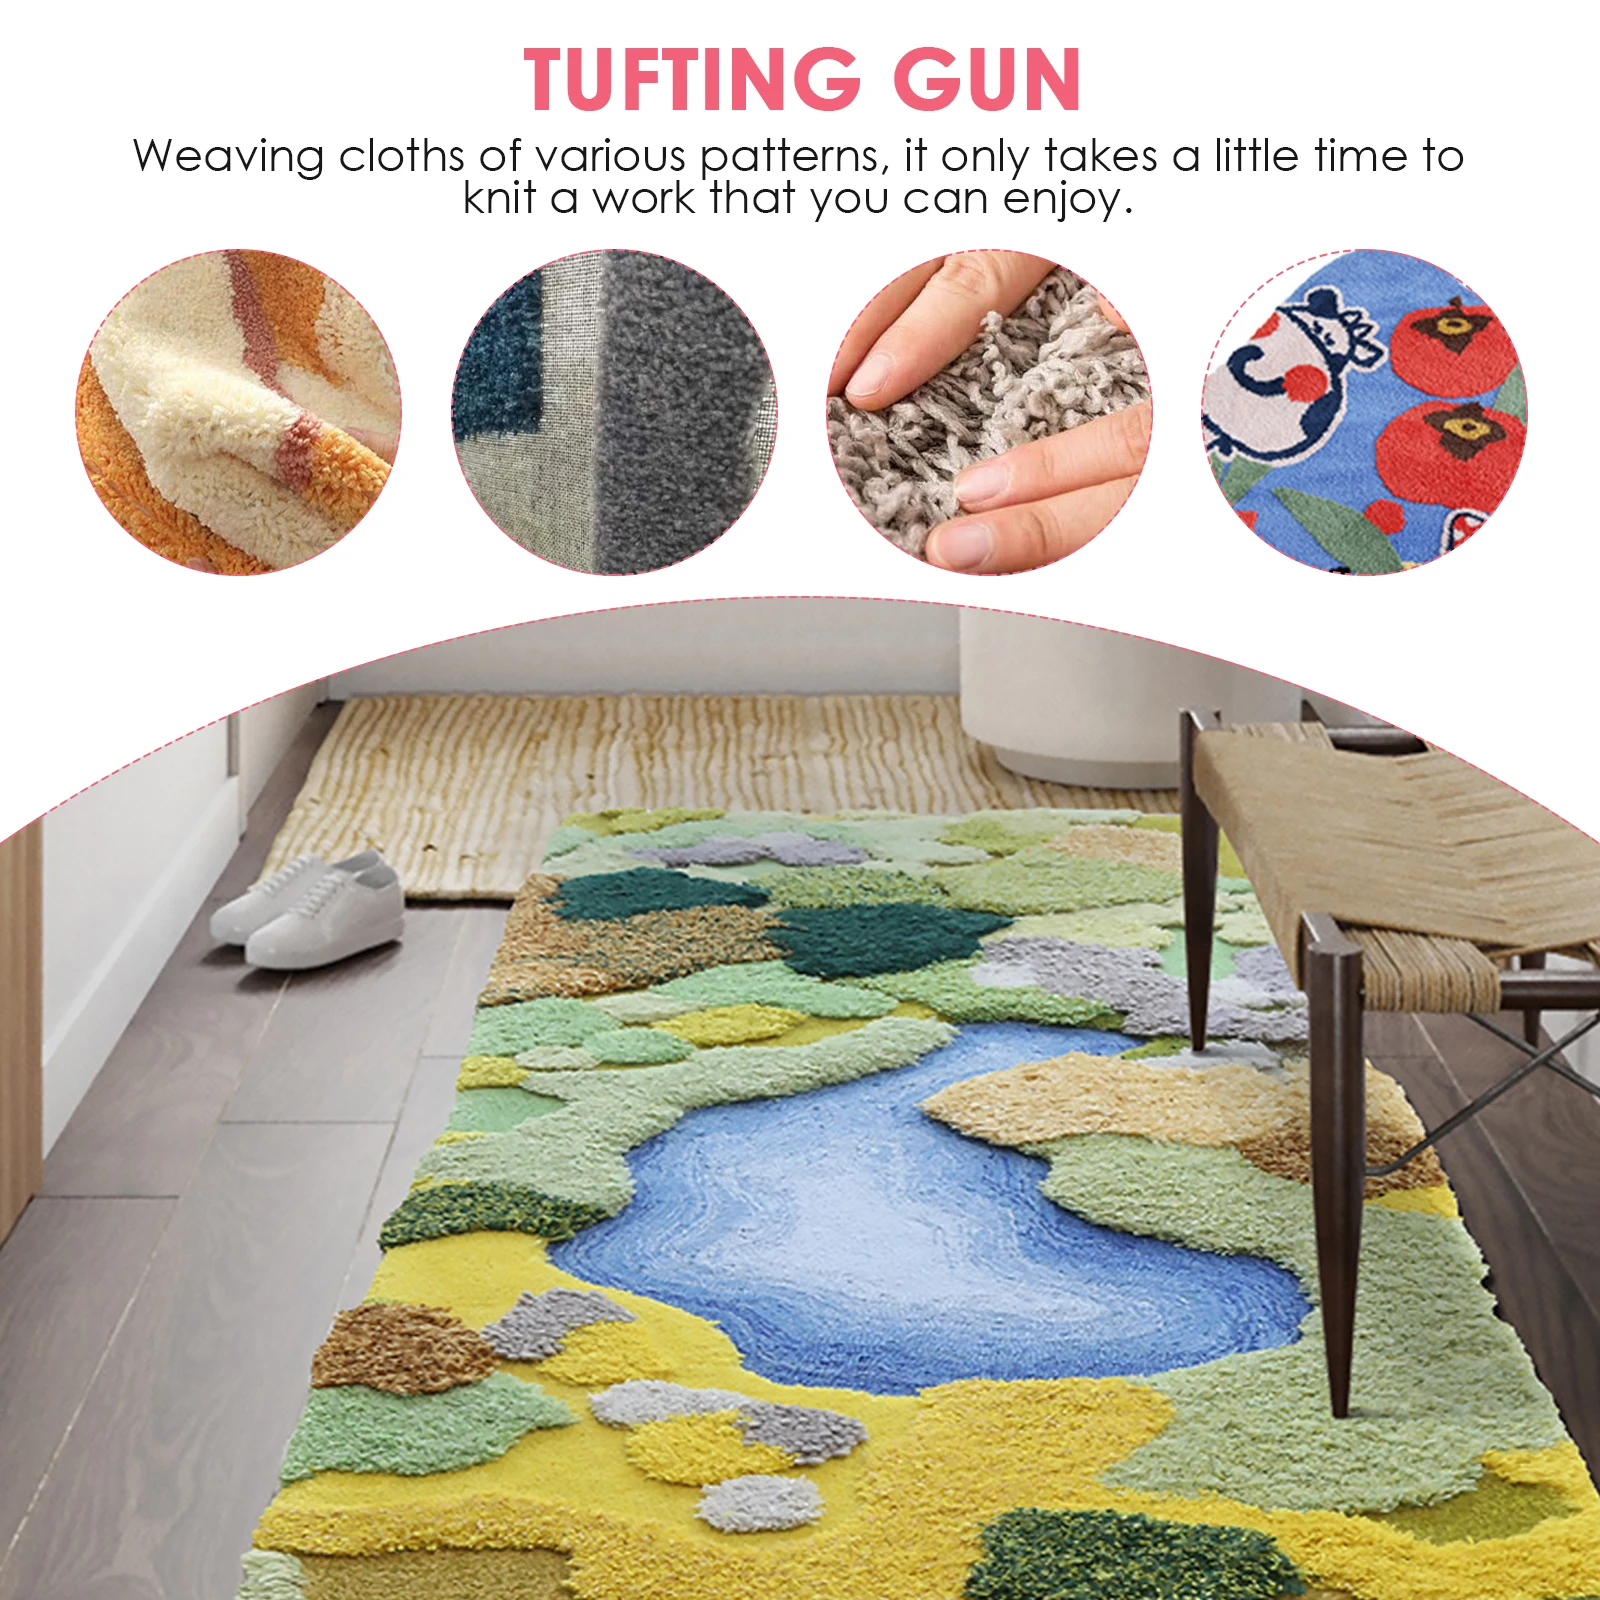 5-40 Stitches Pink Electric Carpet Rug Gun Carpet Weaving Knitting Machine 2 In 1 Tufting Gun Can Do Cut Pile And Loop Pile 220V enlarge